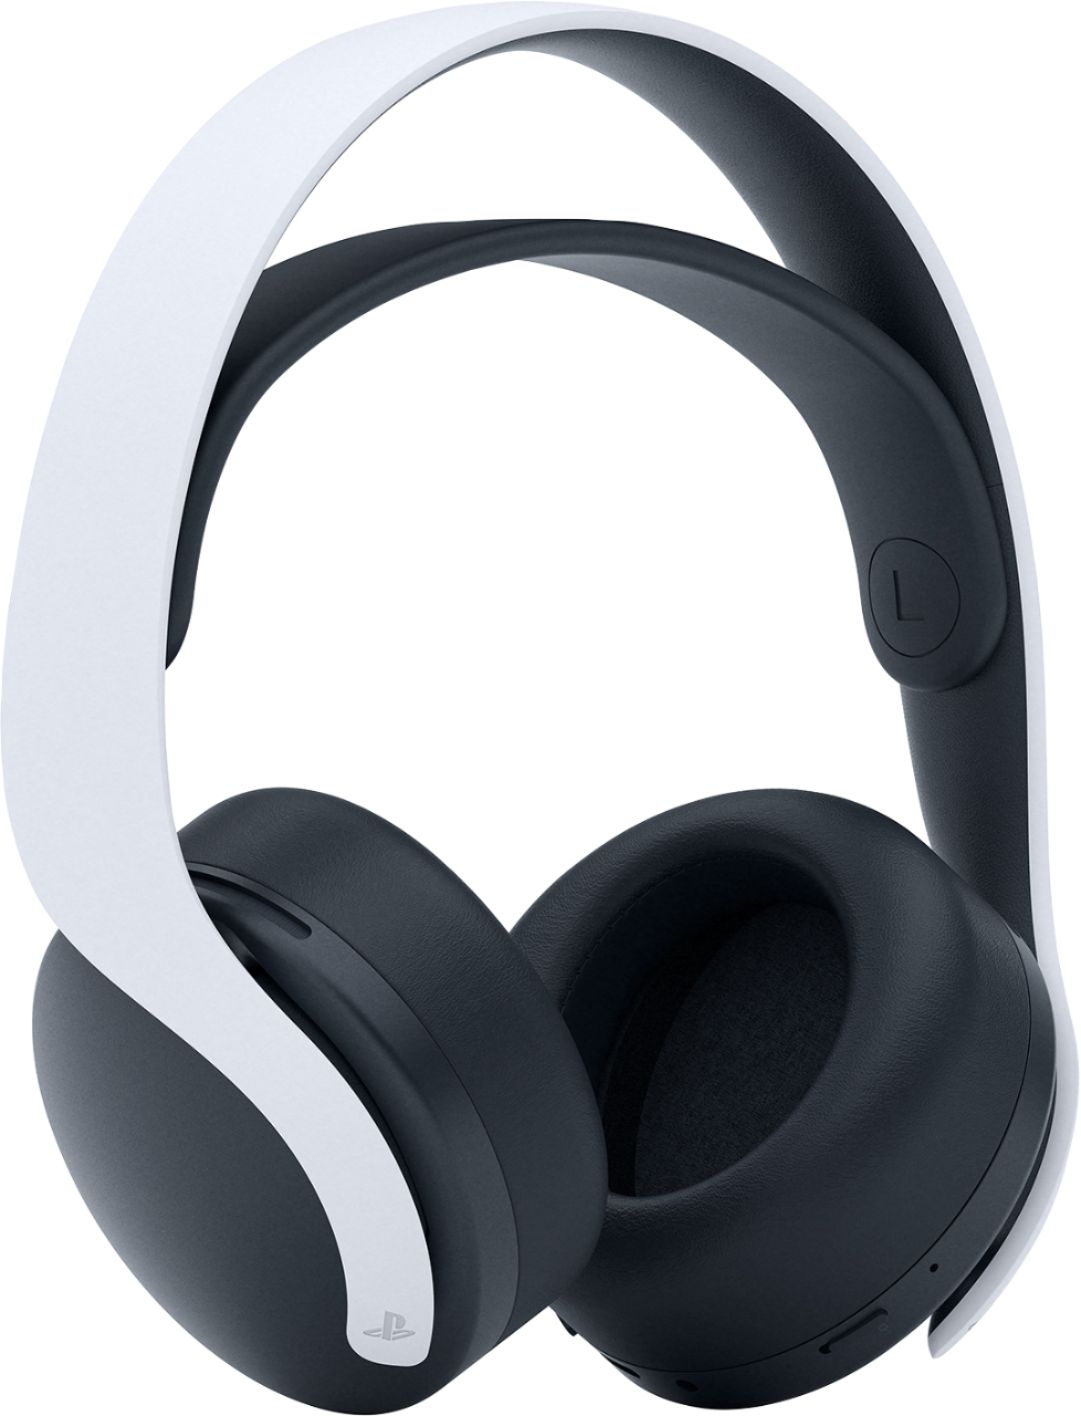 Verknald eigenaar Verlaten Sony PULSE 3D Wireless Headset for PS5, PS4, and PC White 3005688 - Best Buy